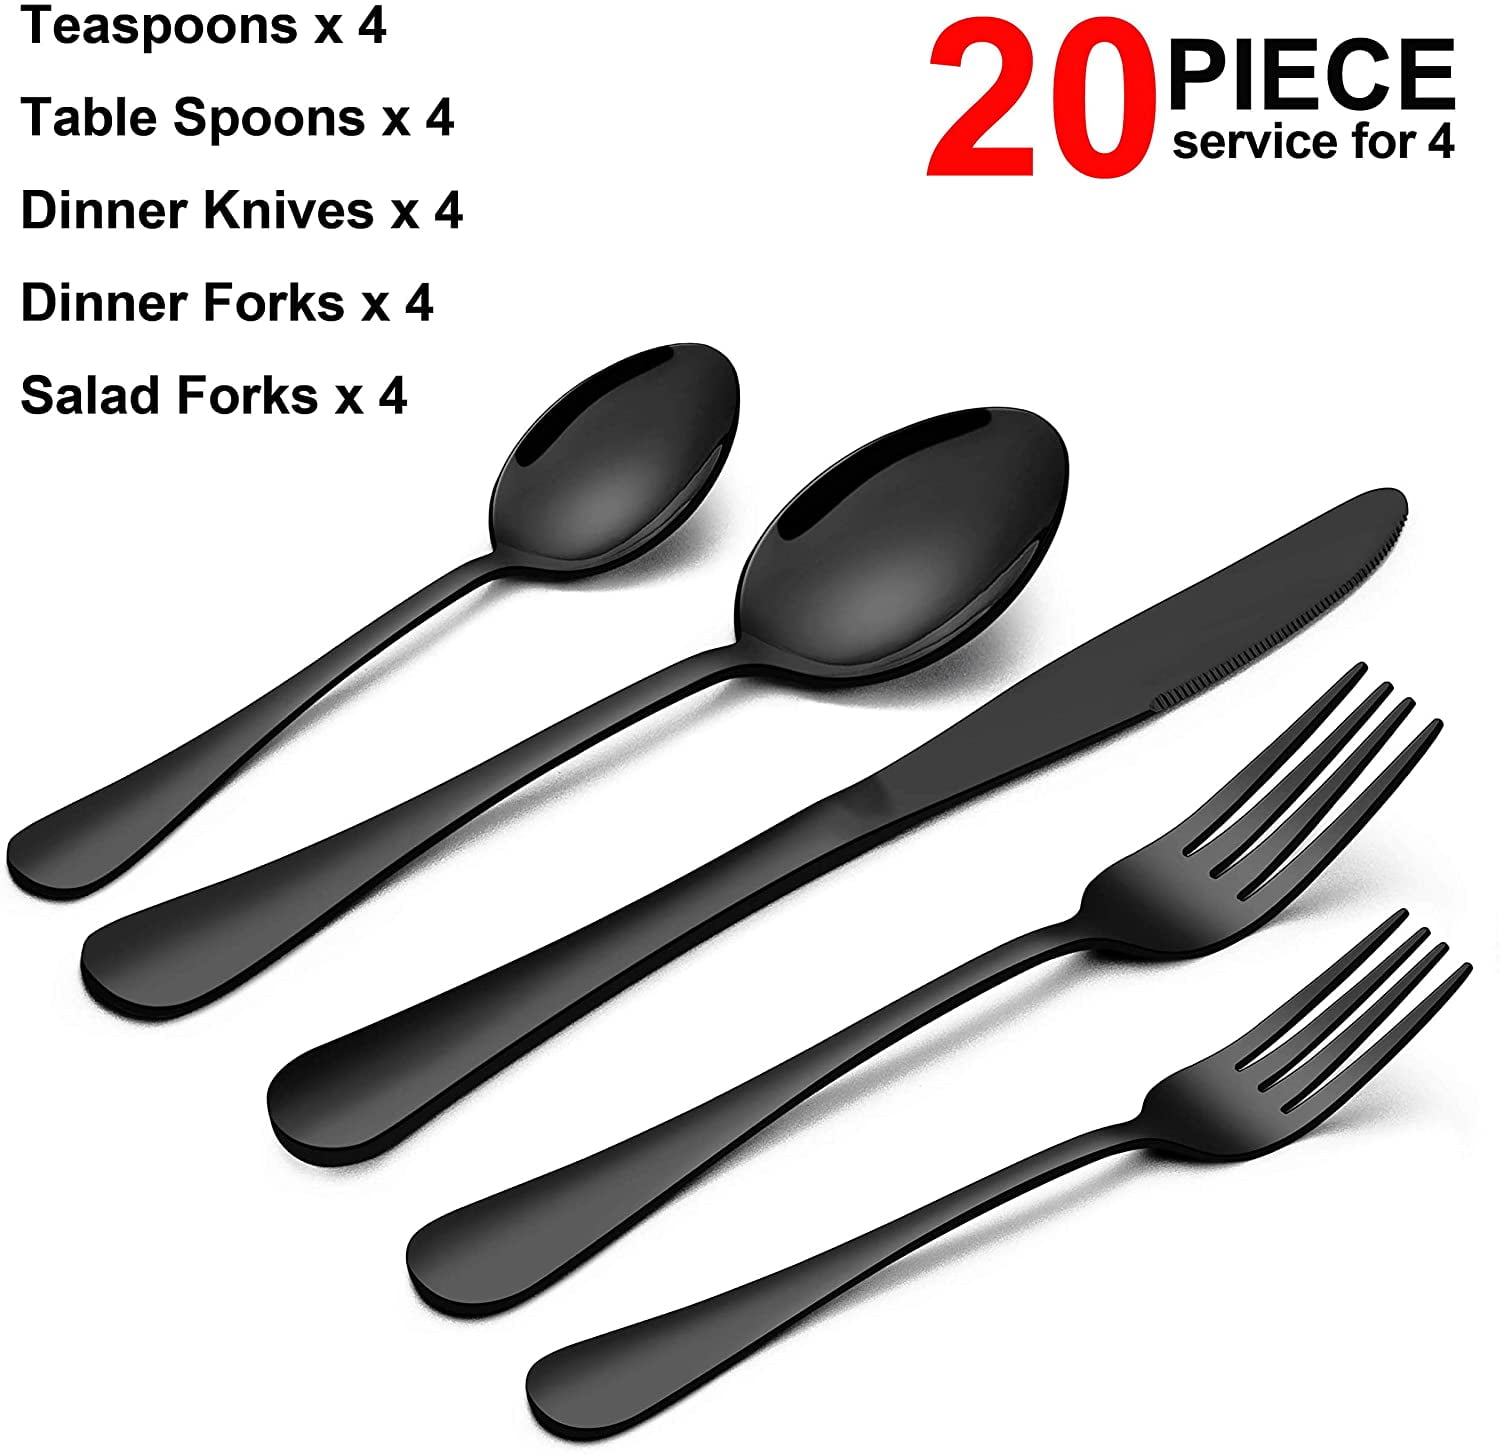 Black Silverware Set, Aisoso 20 Piece Stainless Steel Flatware Cutlery Set